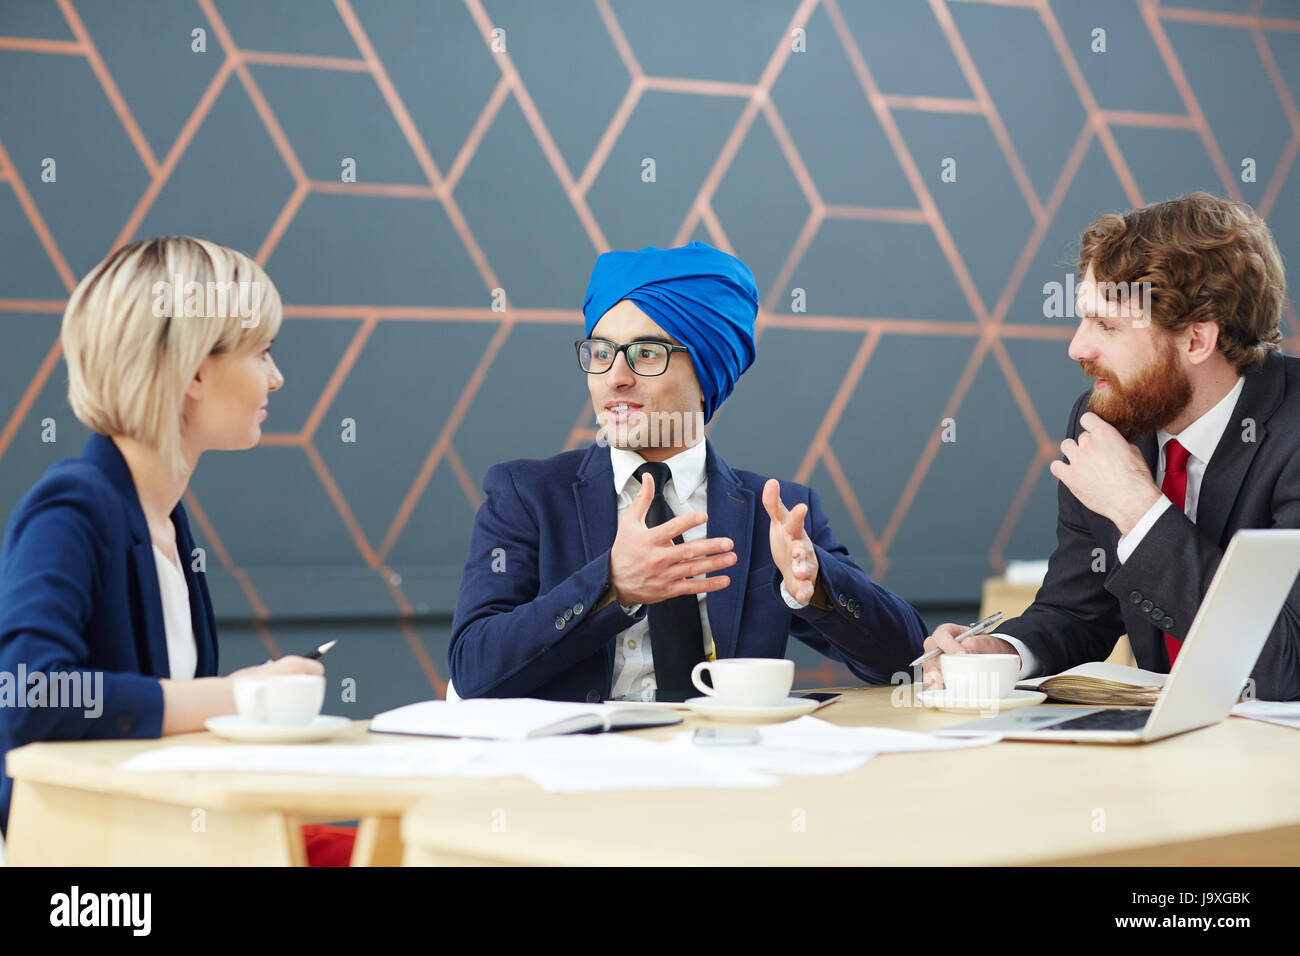 Arabian man in turban giving interview in tv-studio Stock Photo